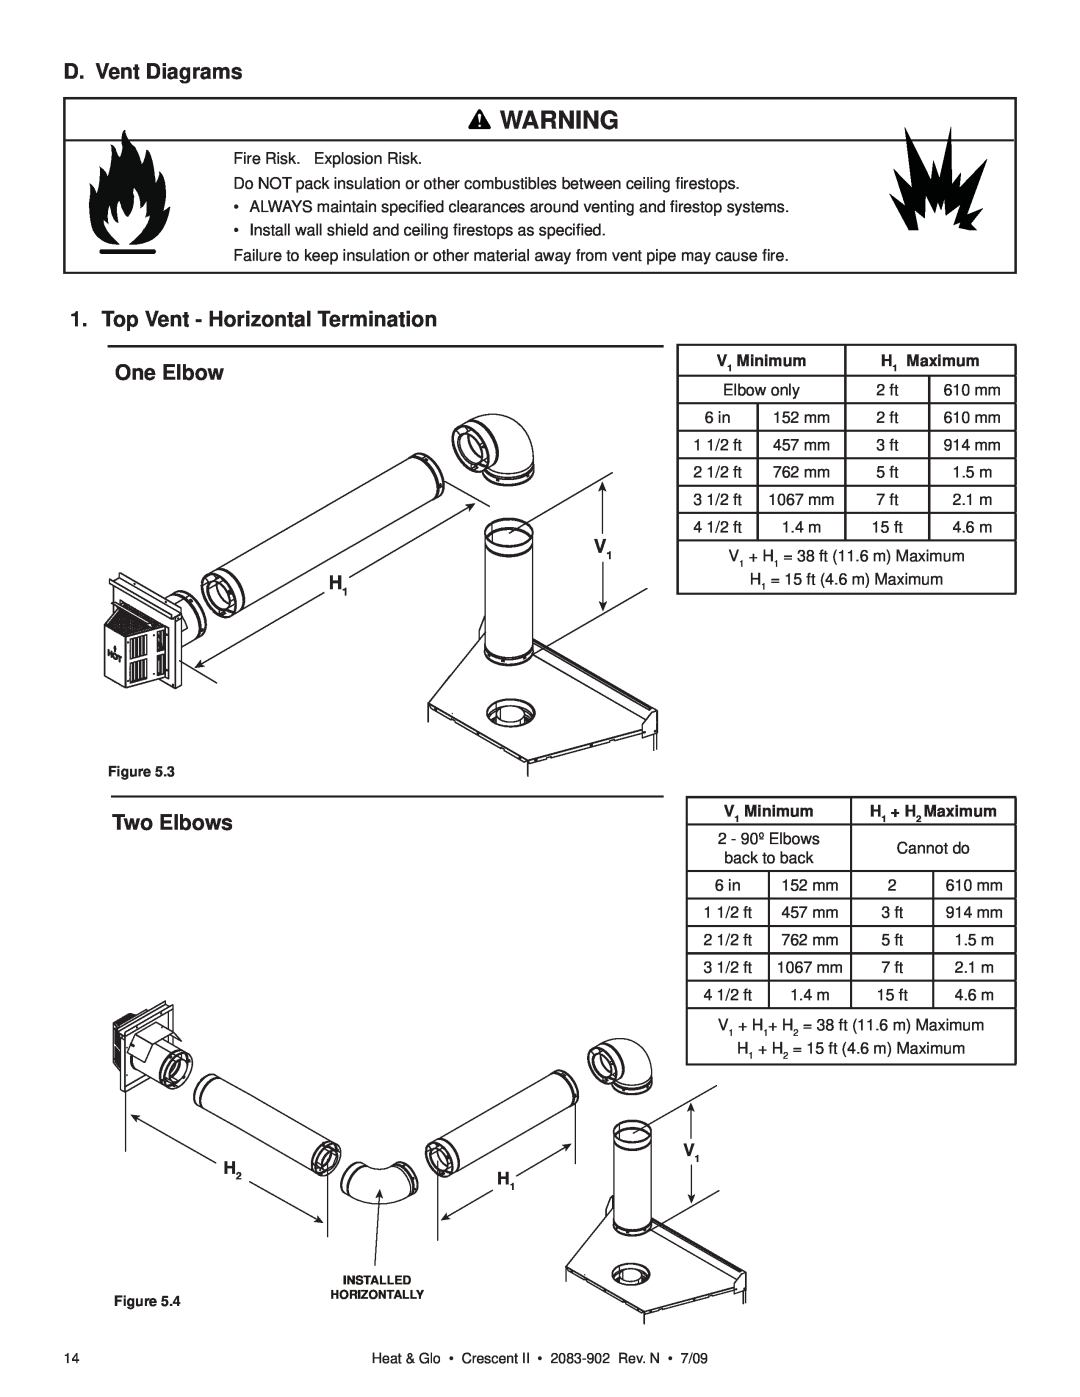 Heat & Glo LifeStyle CRESCENT II D. Vent Diagrams, Top Vent - Horizontal Termination, One Elbow, Two Elbows, V1 Minimum 